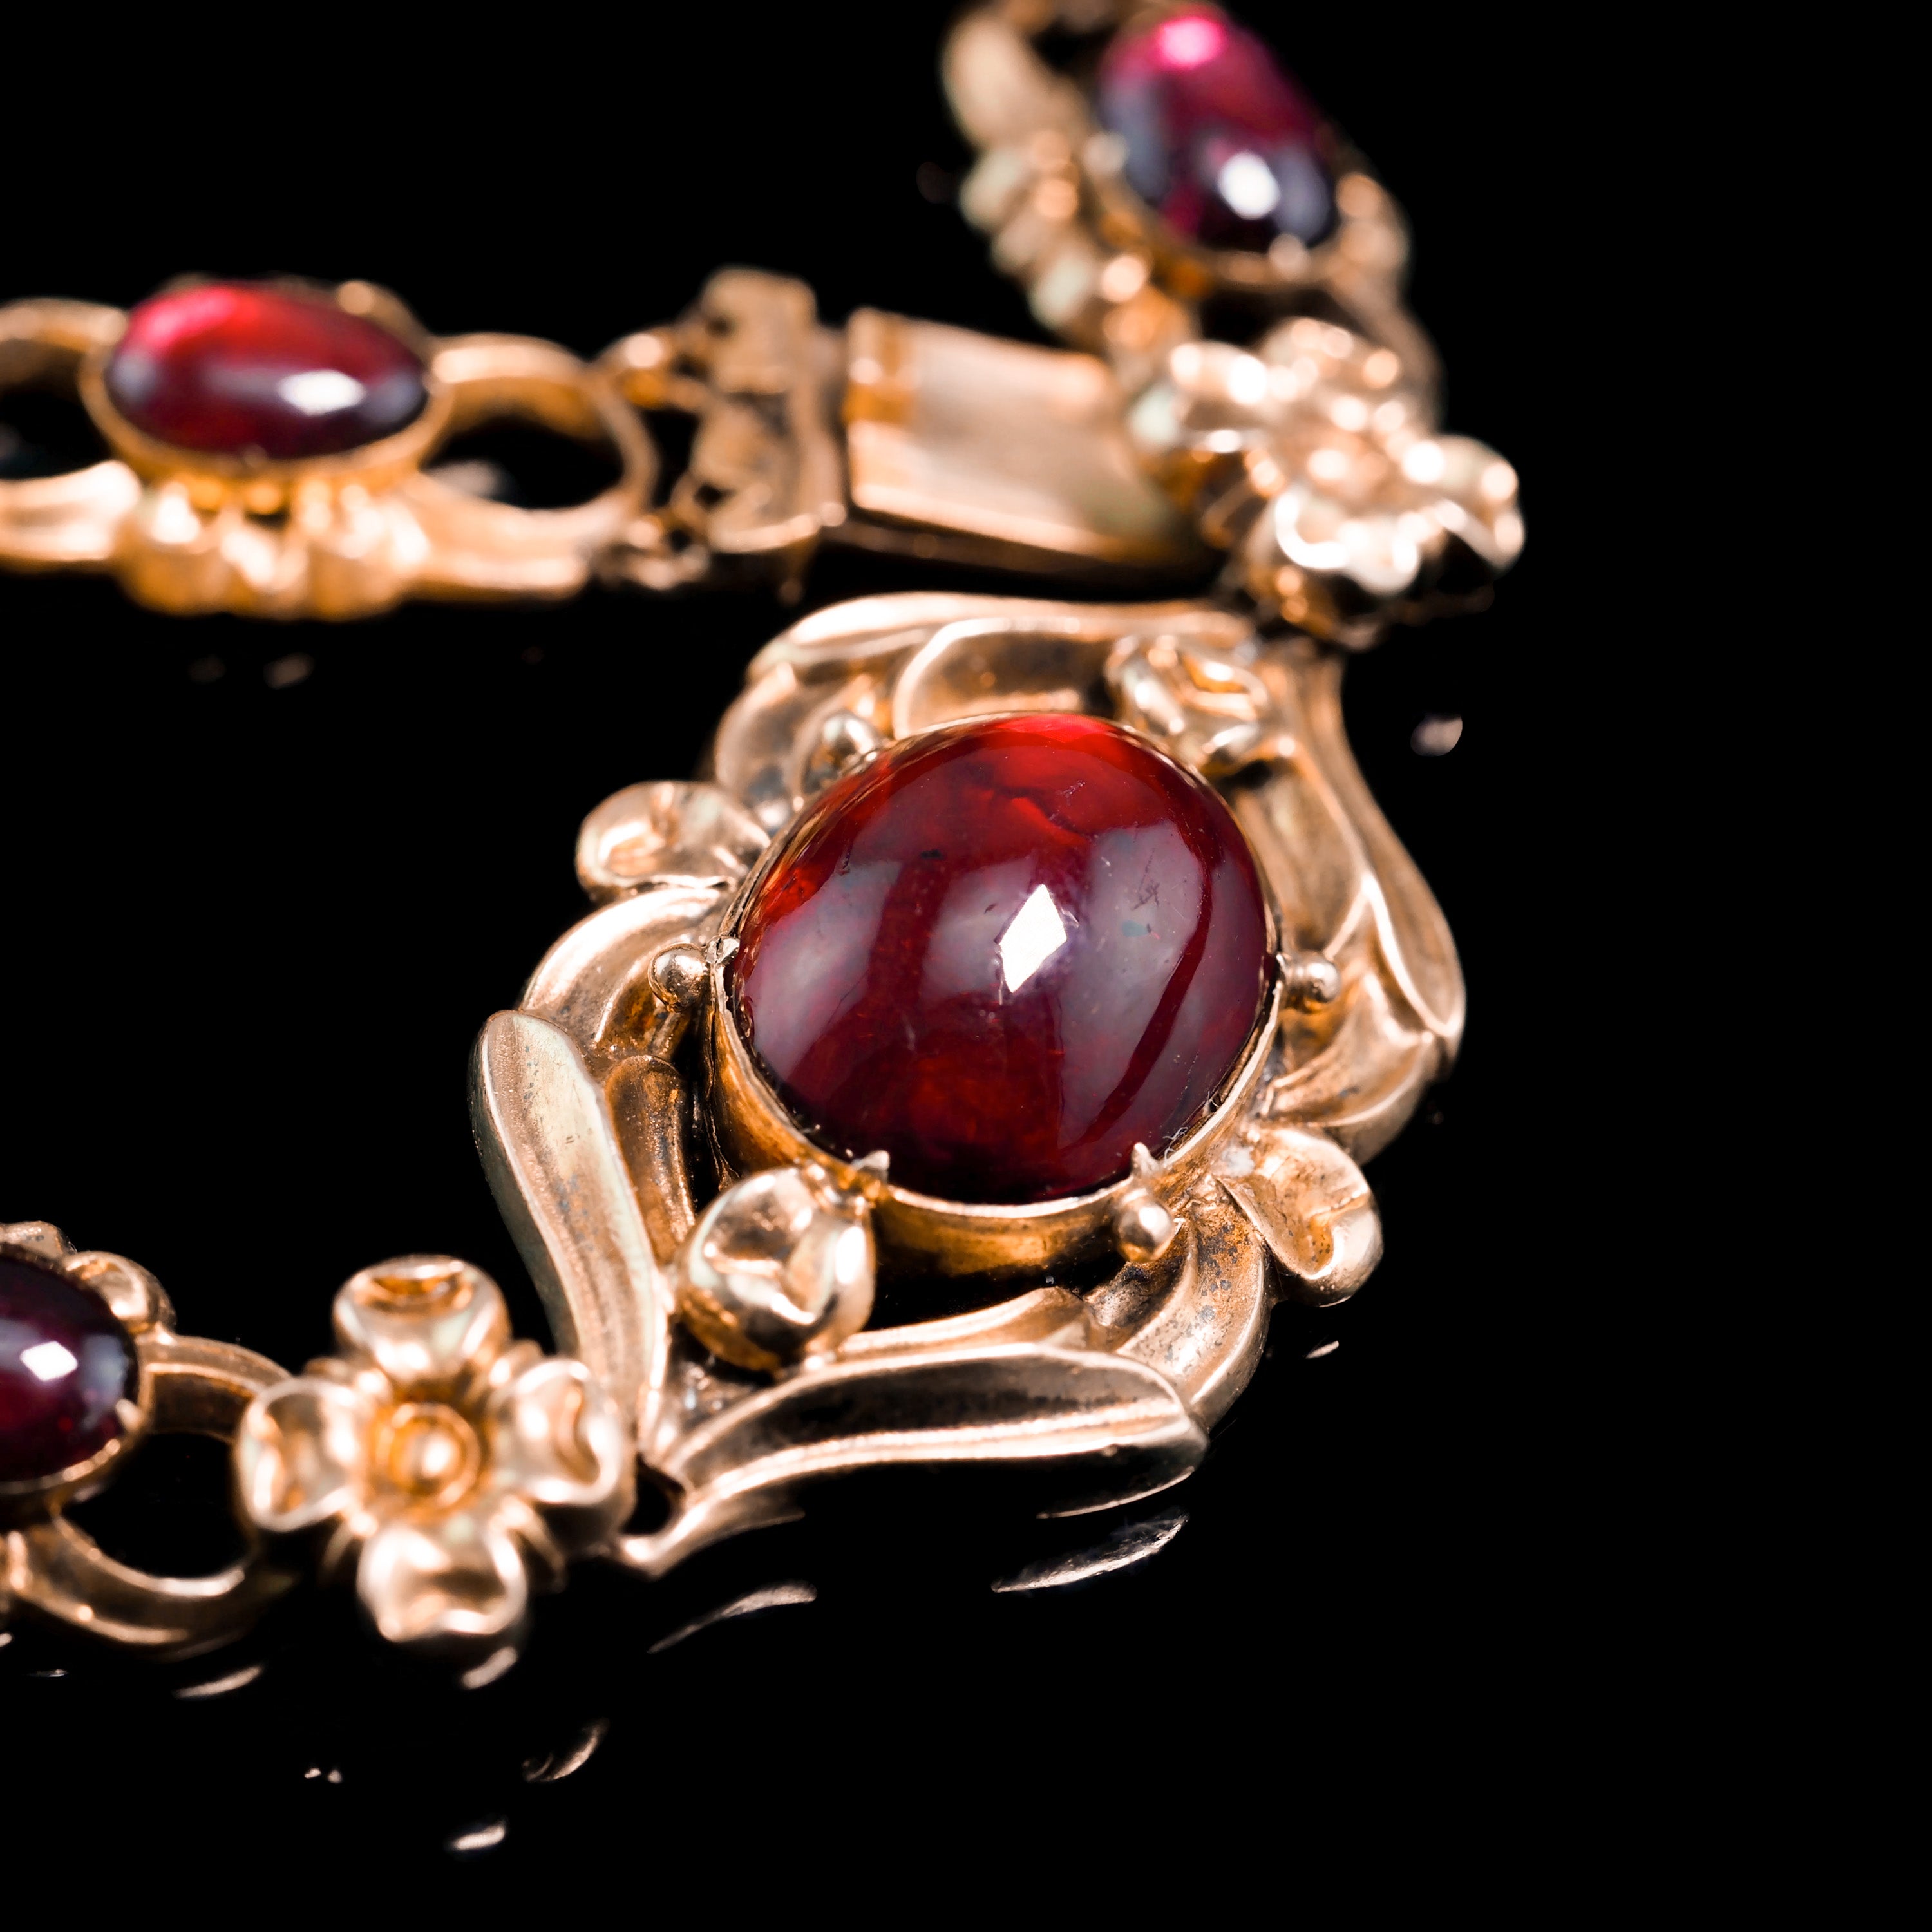 Antique Turn of the Century Bohemian Garnet Bracelet with Flower Design |  eBay